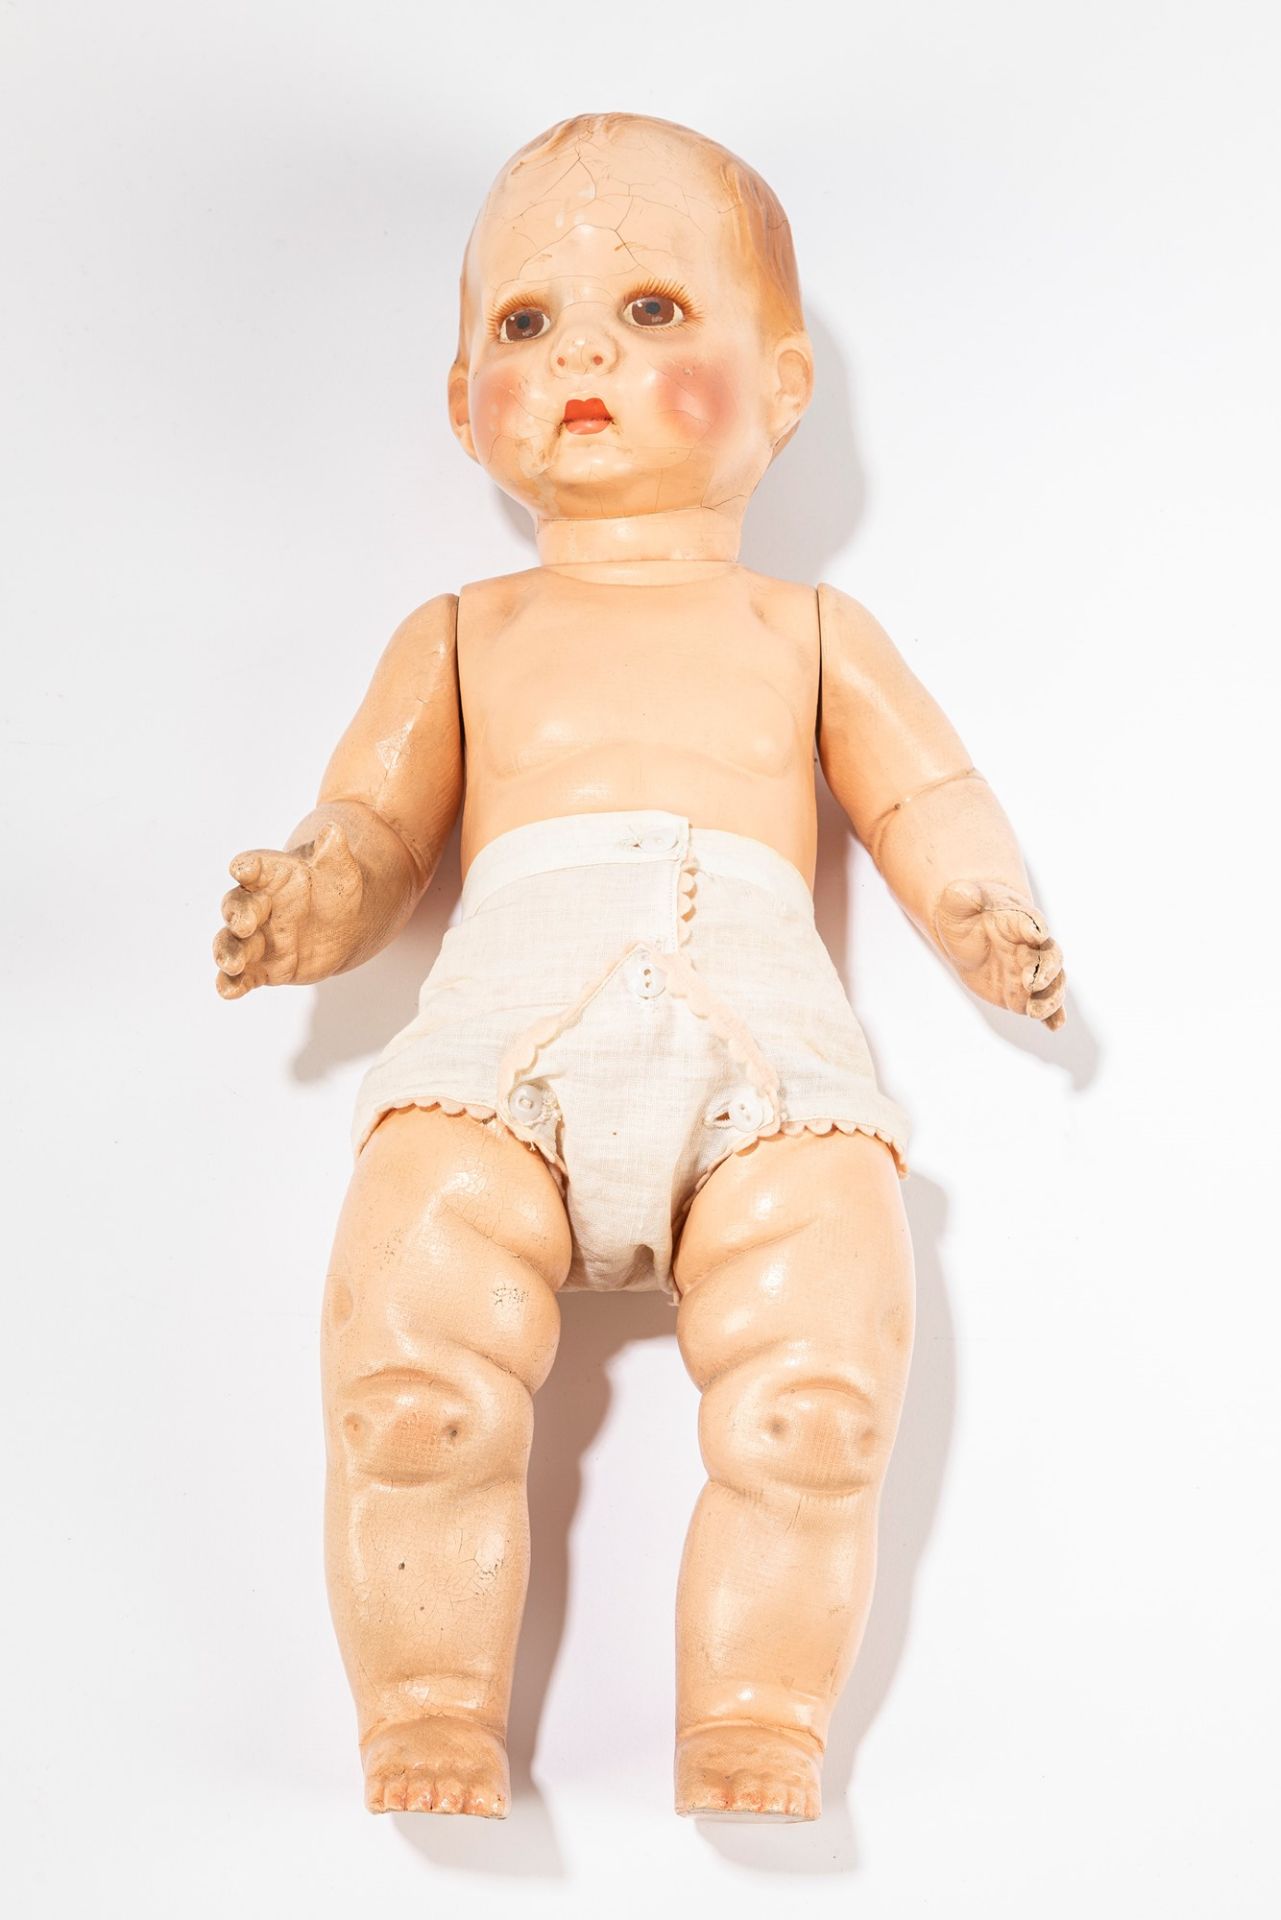 Lenci - Rare washable baby "Gioia", 1932 - Image 2 of 2